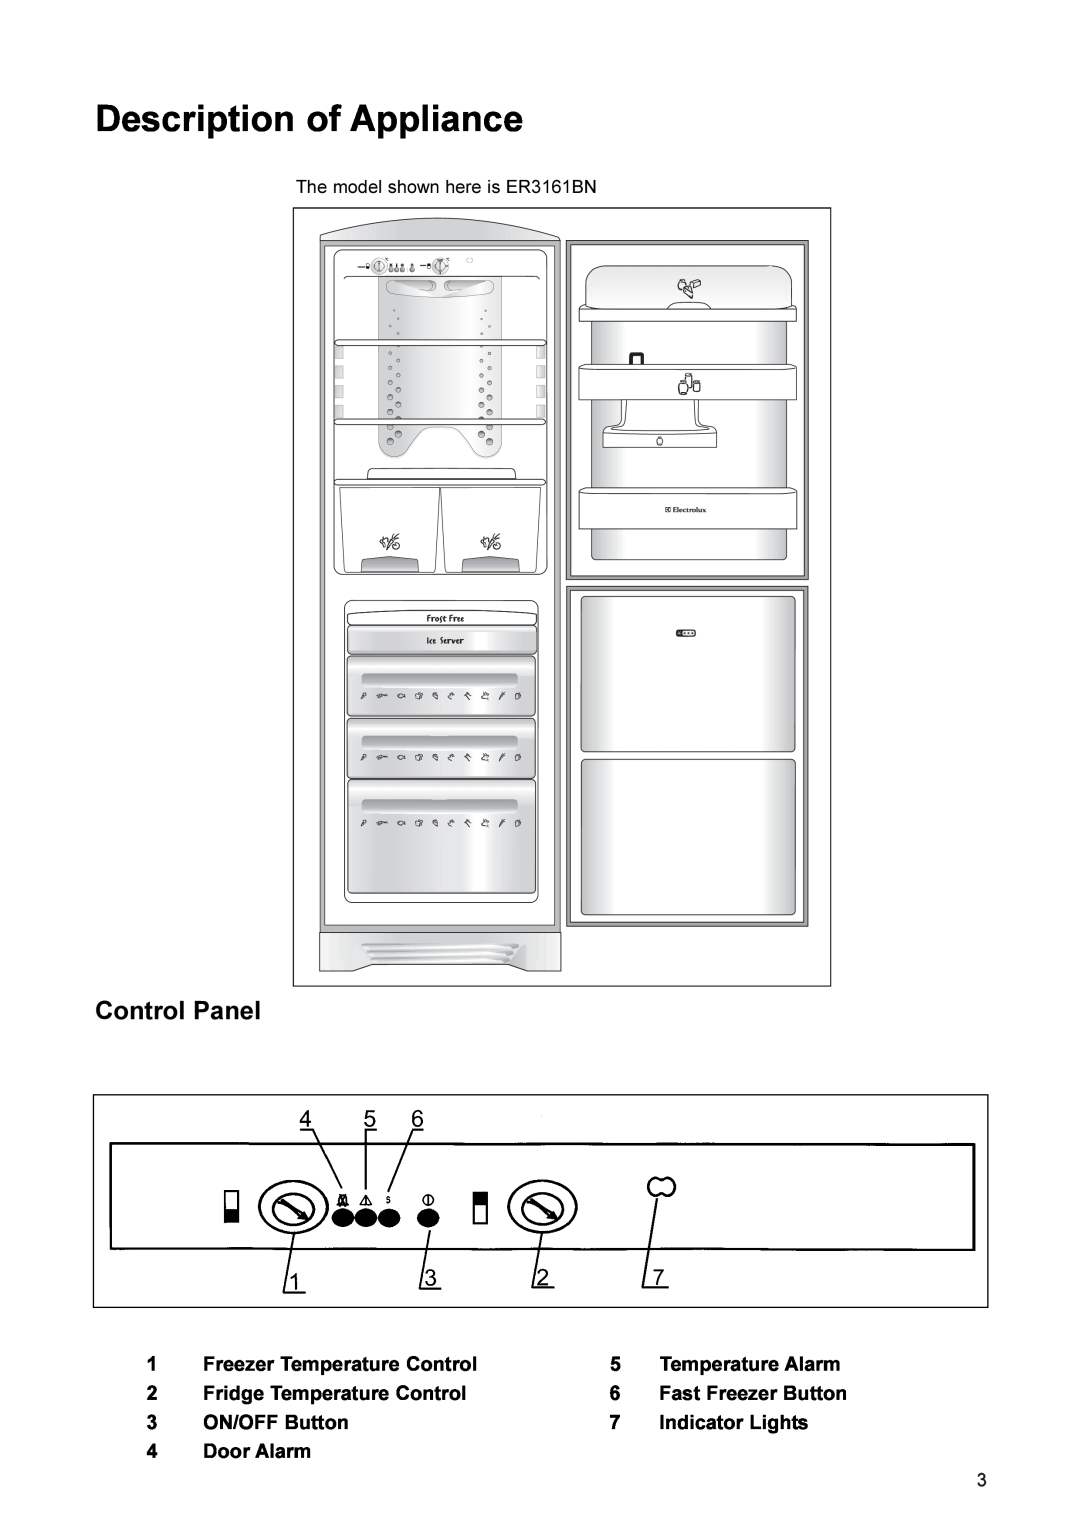 Electrolux ER 3161 BN Description of Appliance, Control Panel, Freezer Temperature Control, Temperature Alarm, Door Alarm 